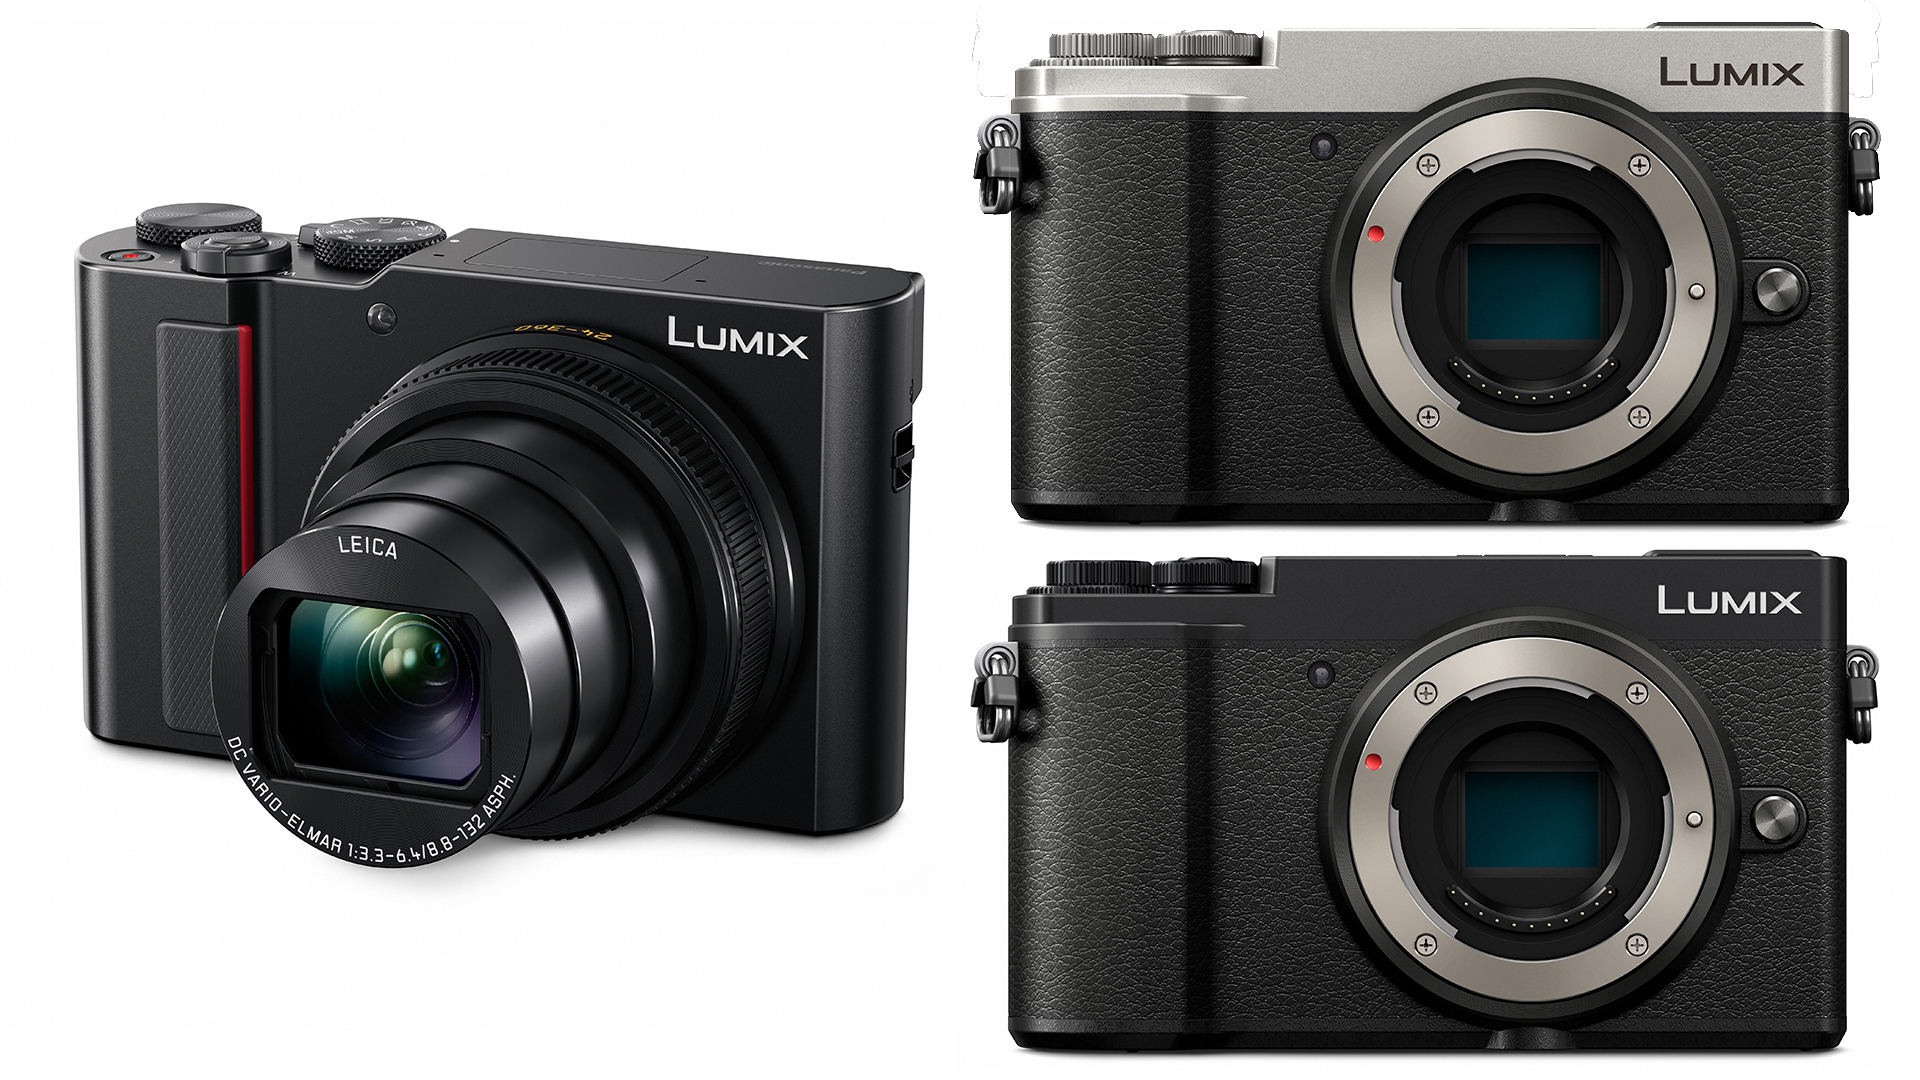 Panasonic LUMIX GX9 and TZ200 Cameras Revealed